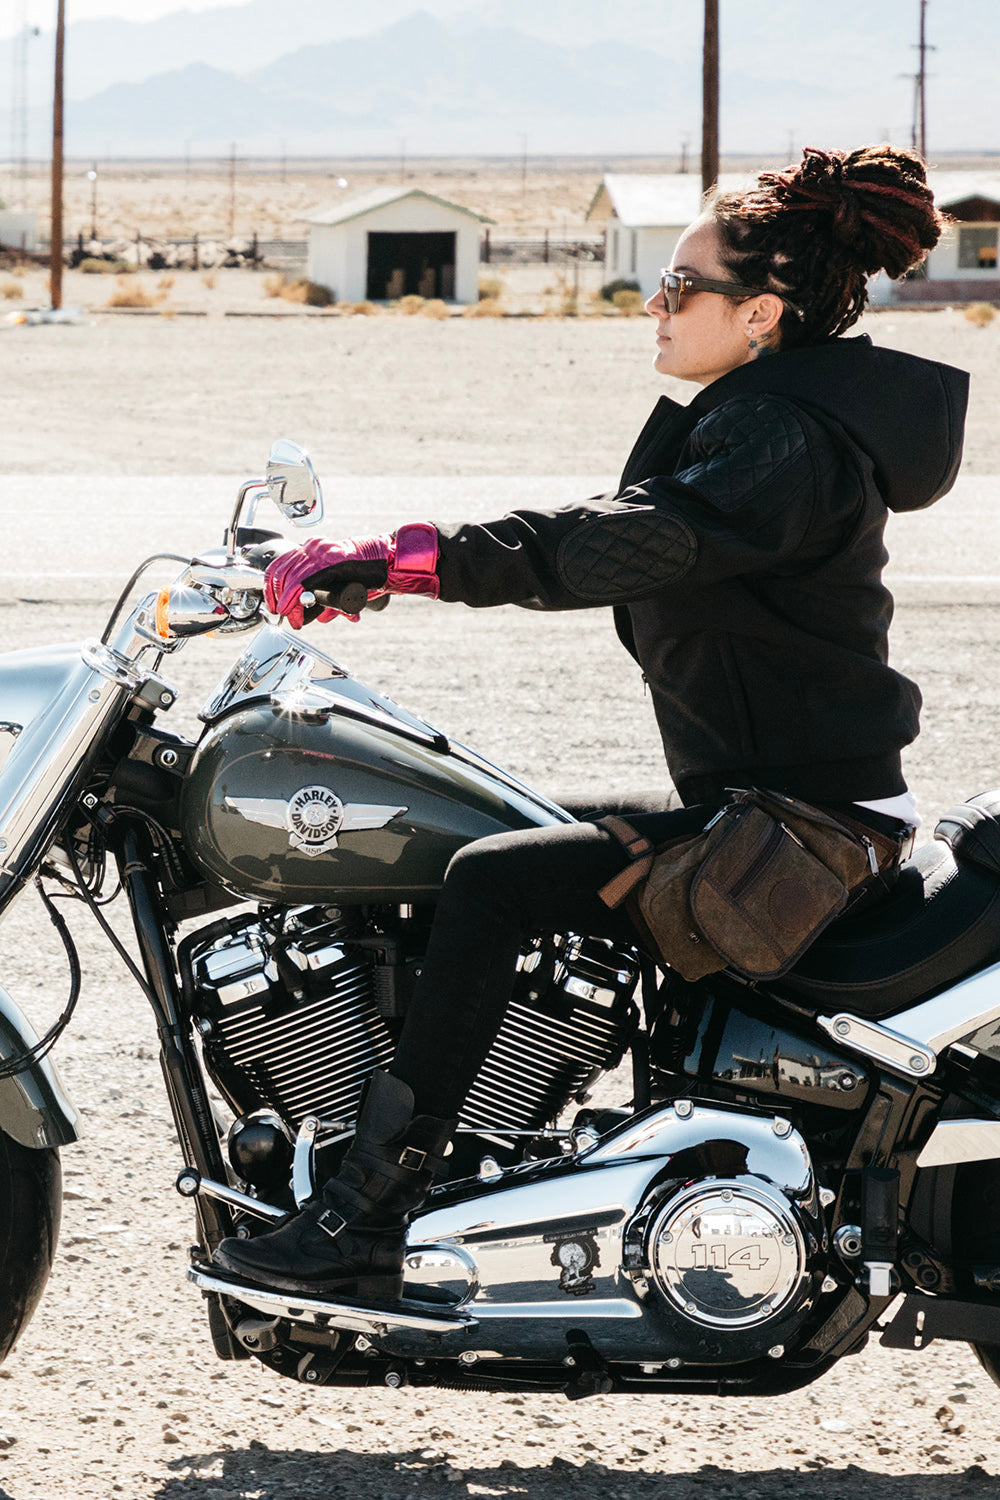 Women's Motorcycle Riding Gear  Pando Moto, Oxford, Black Arrow